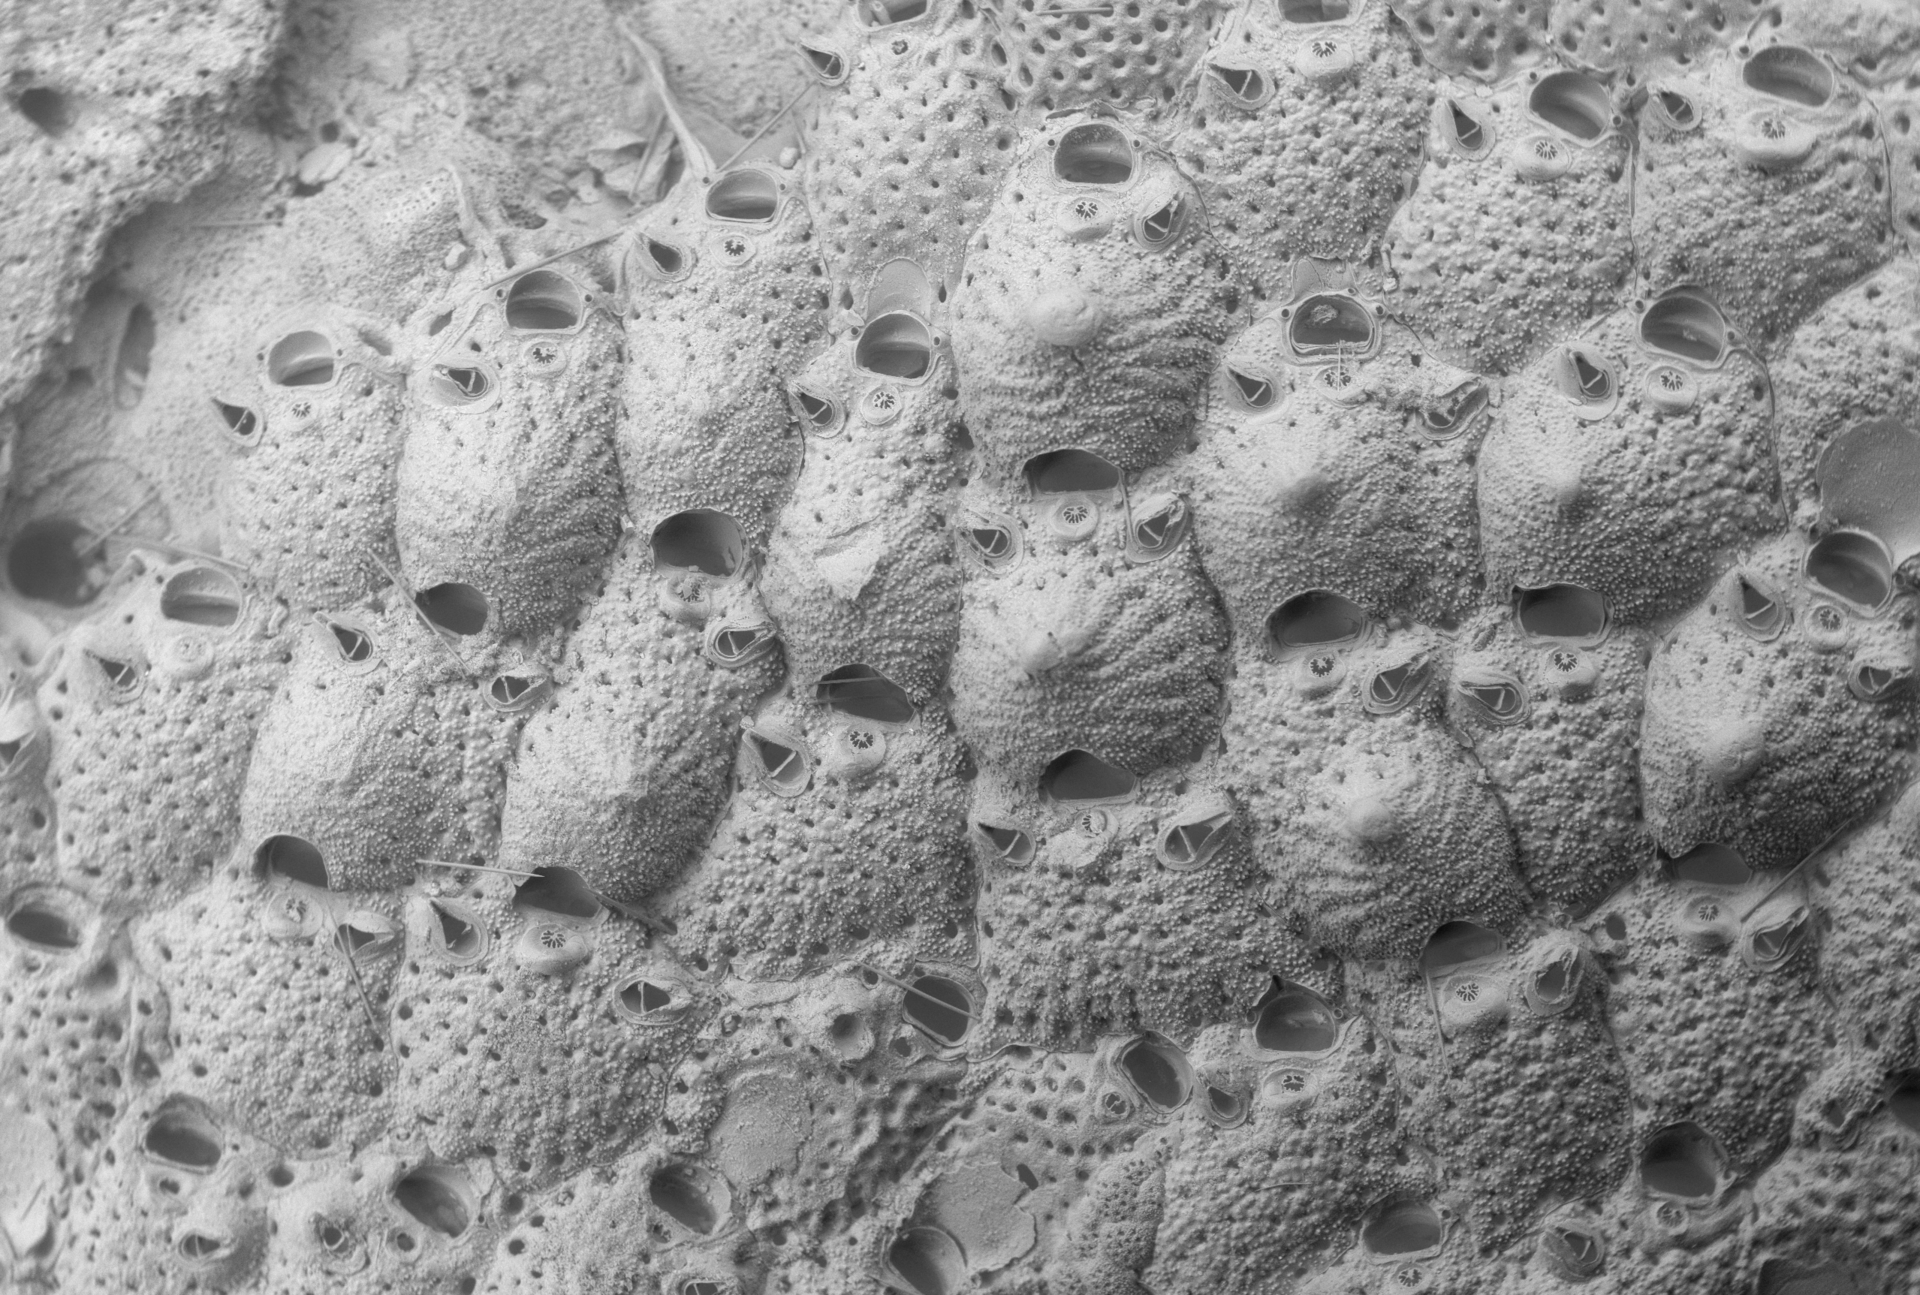 A black and white Electron microscope image of Microporella arctica